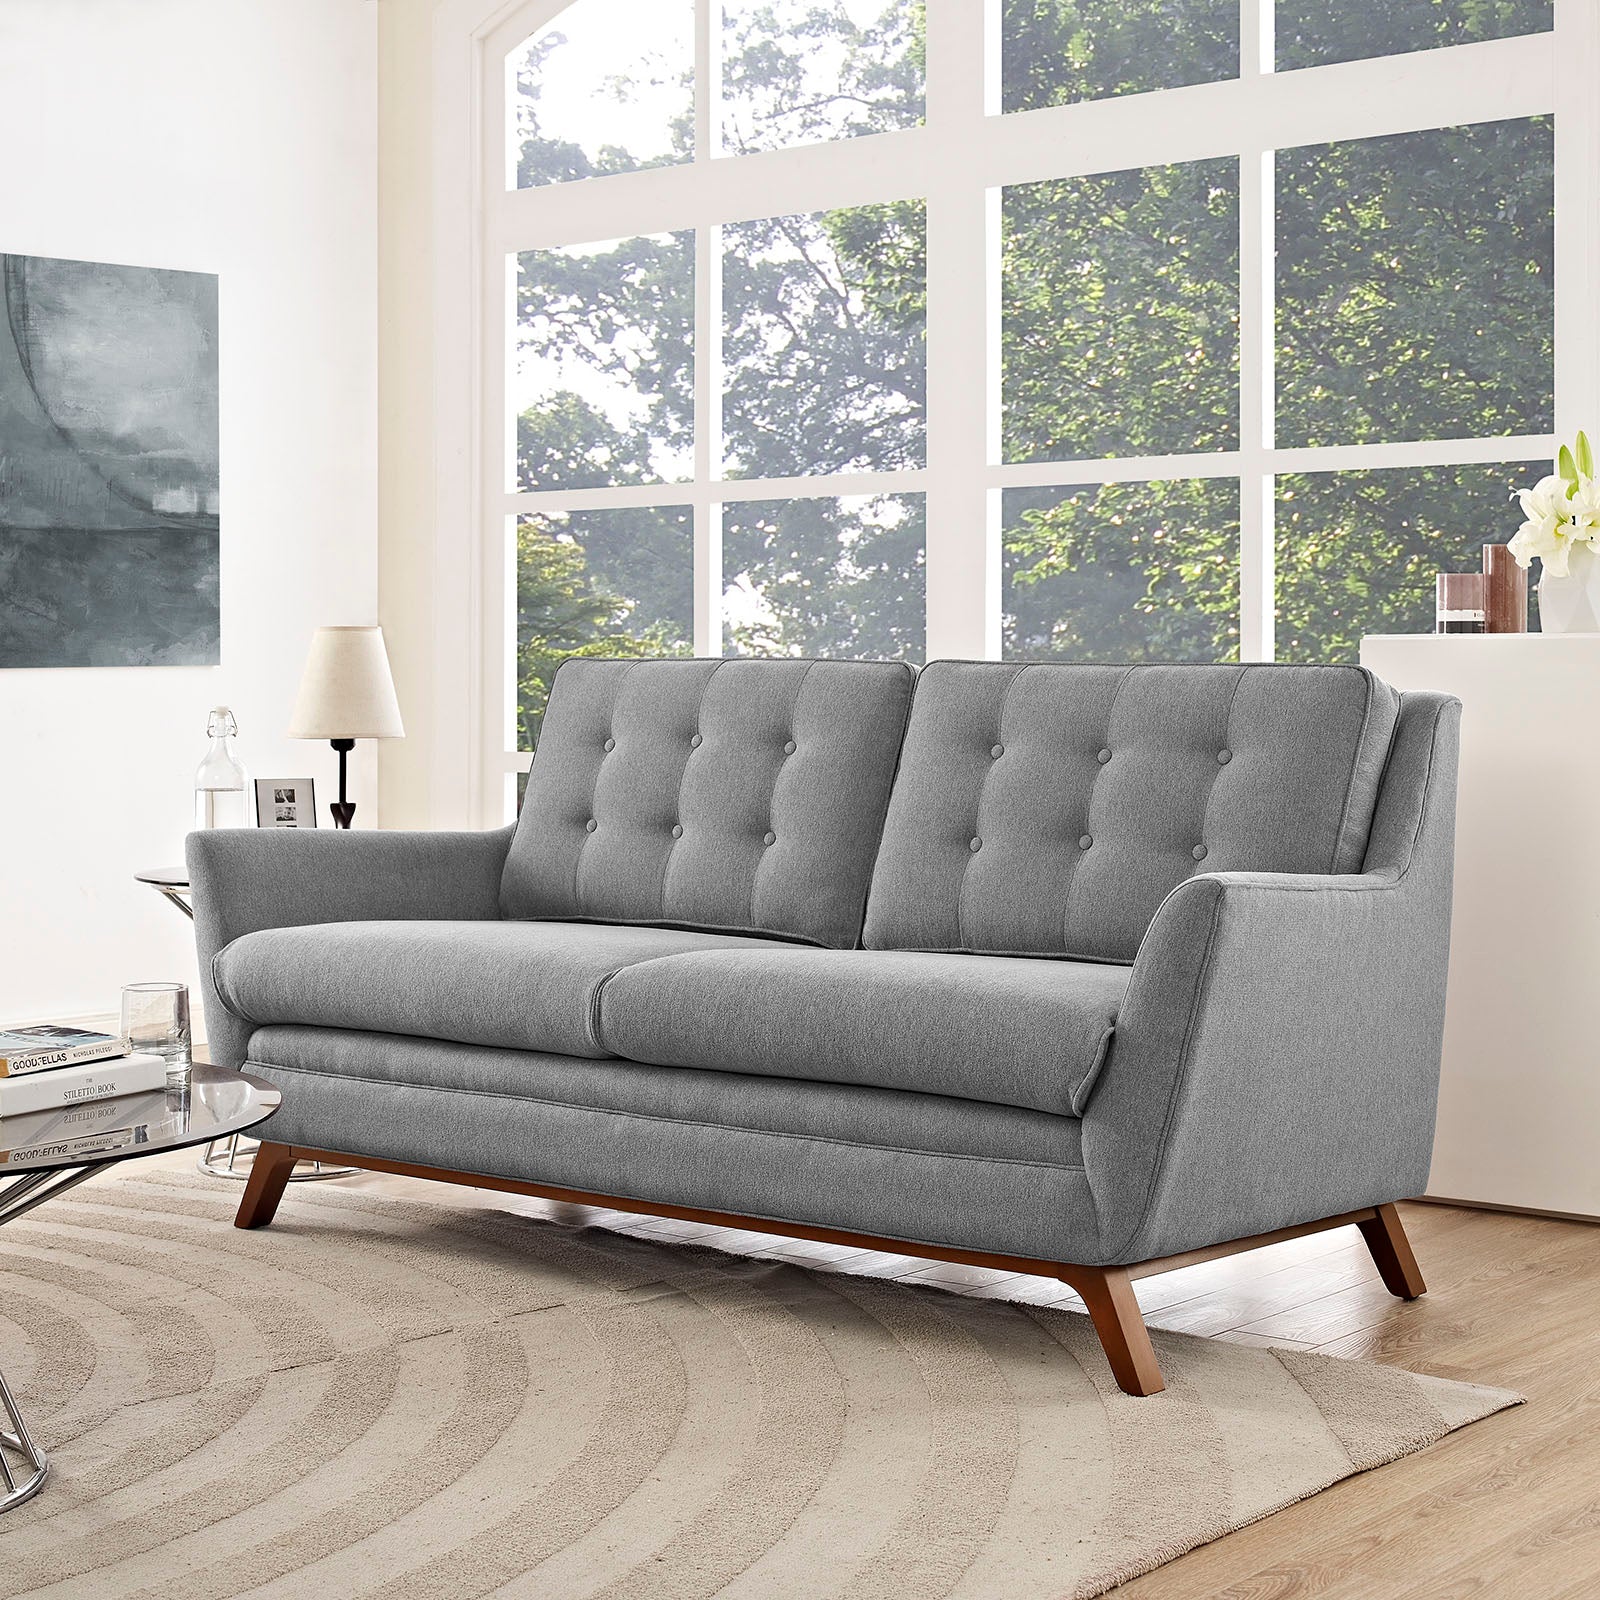 Beguile Upholstered Fabric Loveseat - East Shore Modern Home Furnishings